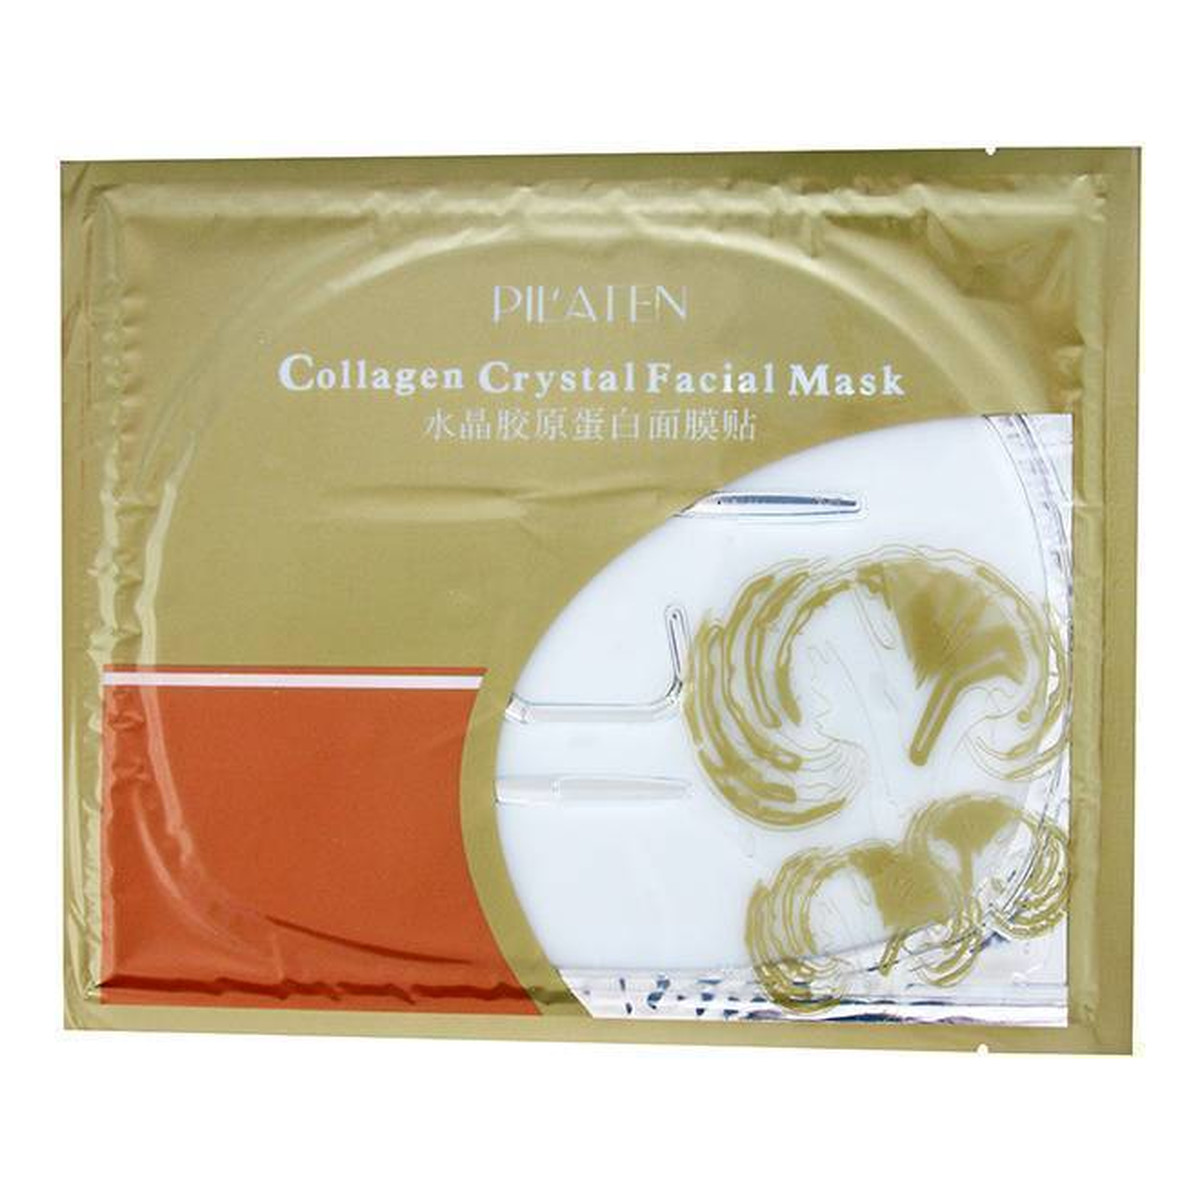 Pilaten Crystal Collagen Facial Mask krystaliczna kolagenowa maska na twarz 60g